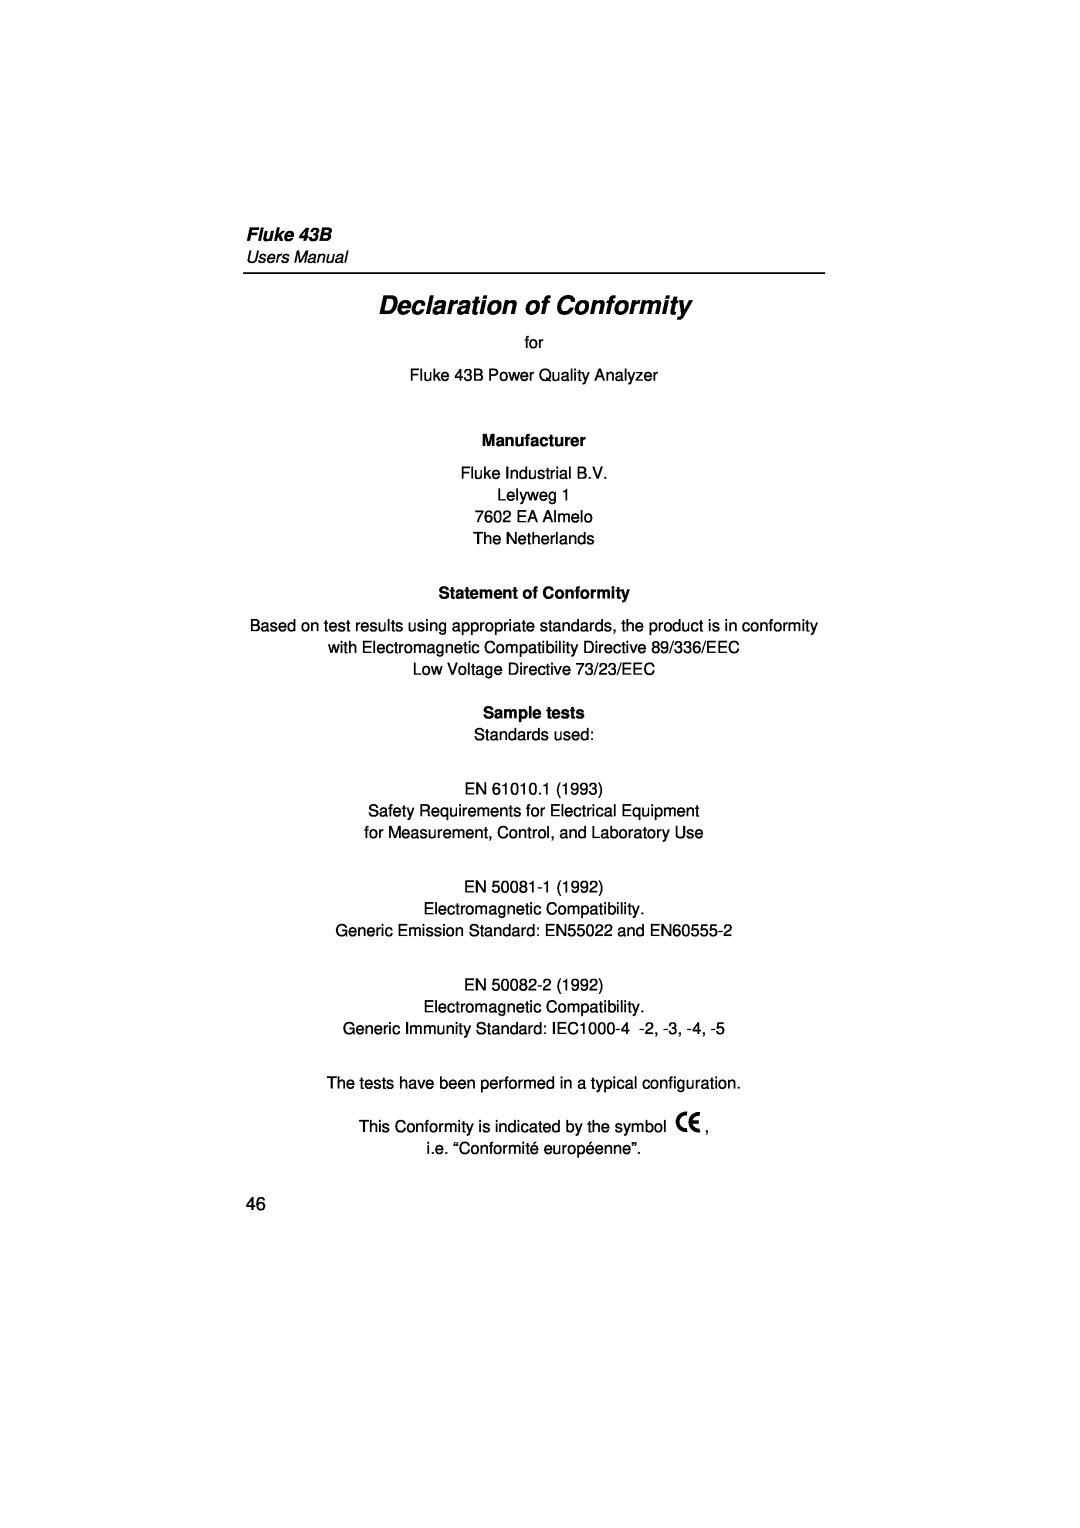 Fluke Declaration of Conformity, Fluke 43B, Users Manual, Manufacturer, Statement of Conformity, Sample tests 